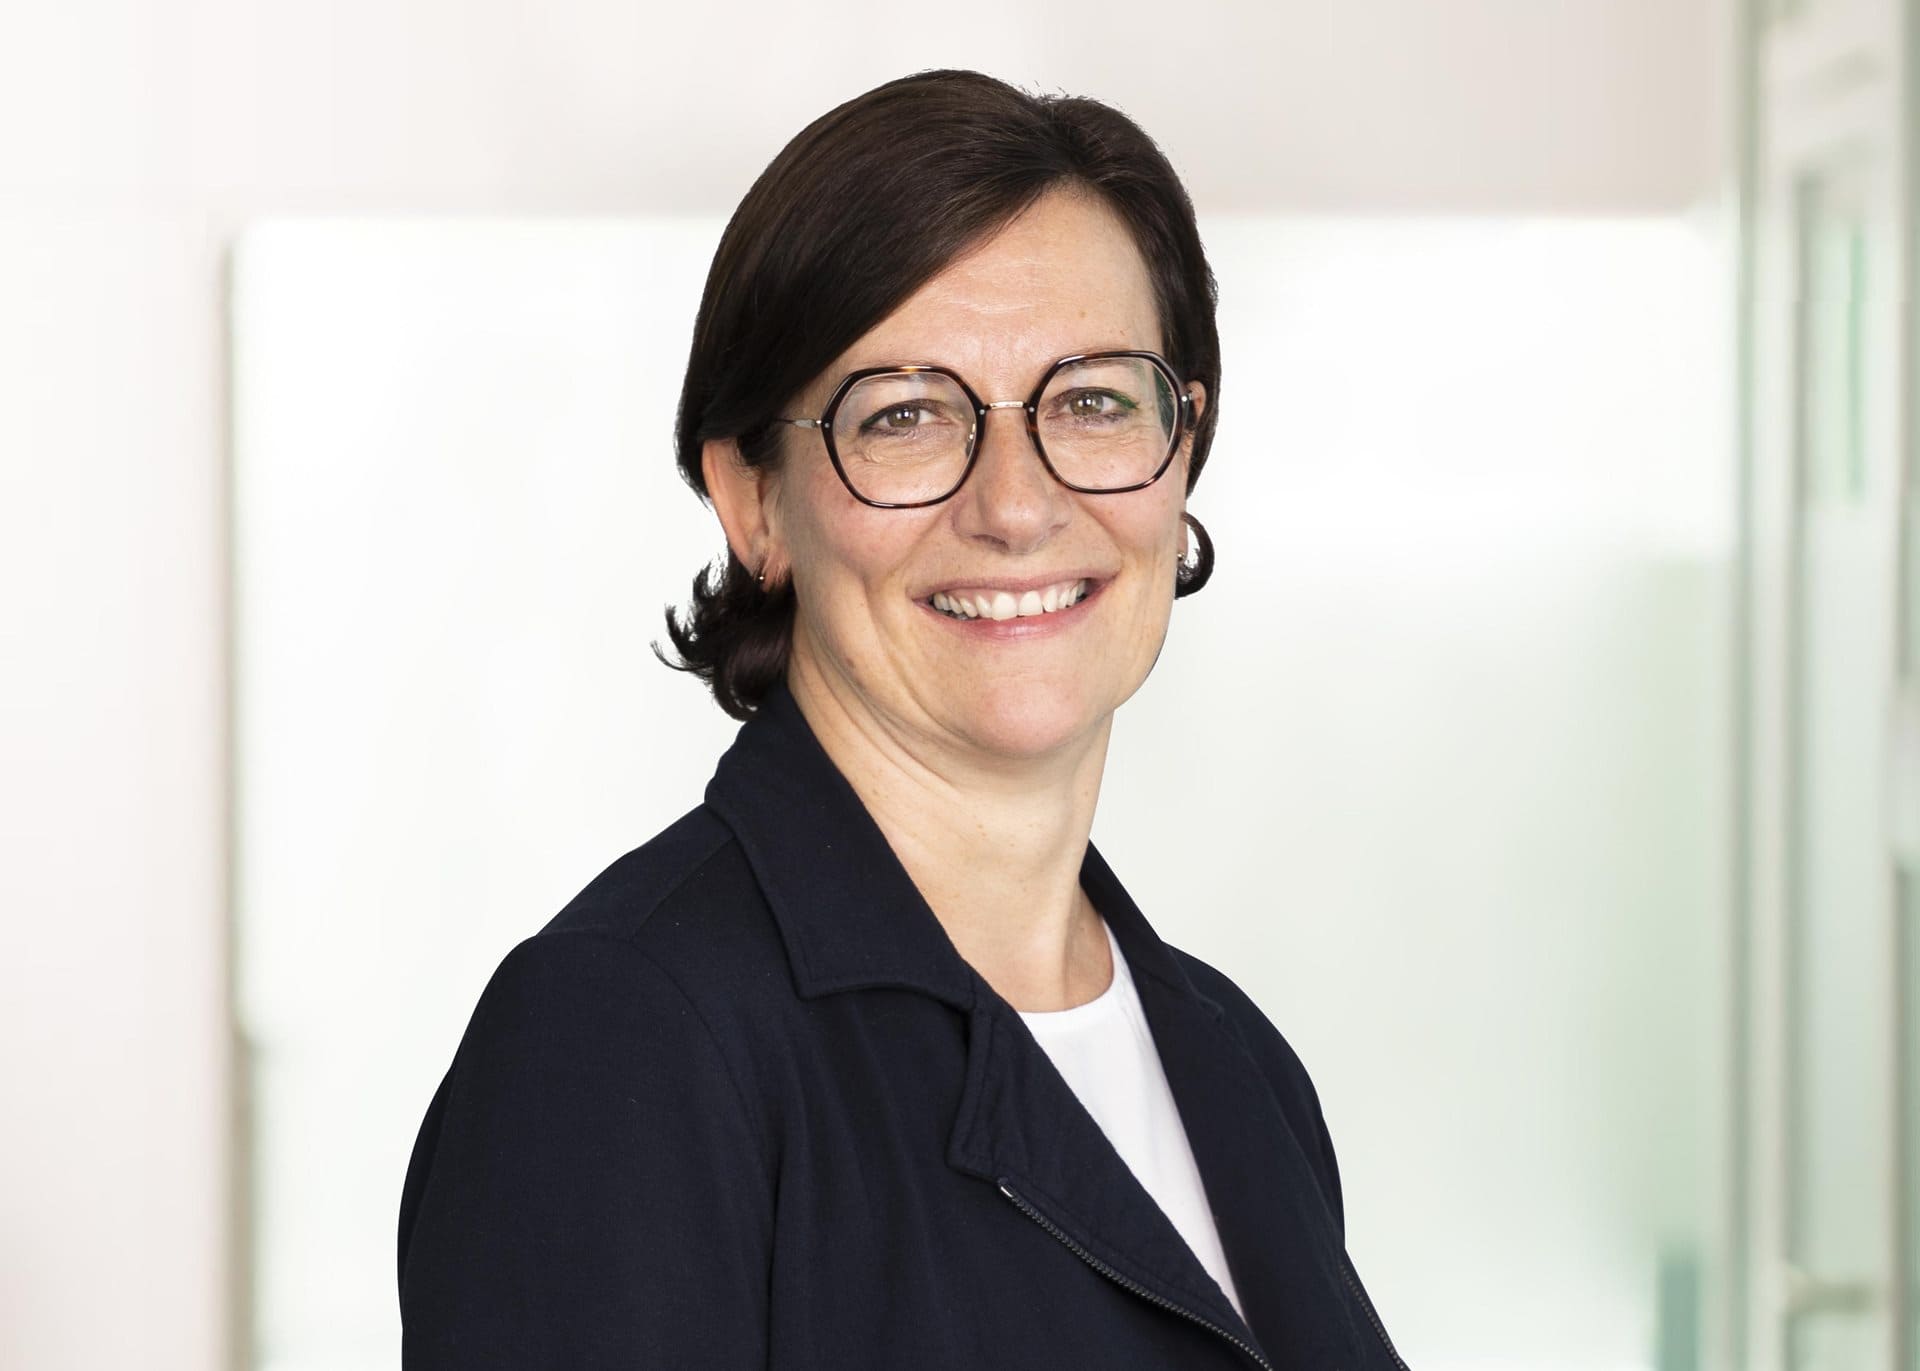 Isabelle Schunck, Senior Manager